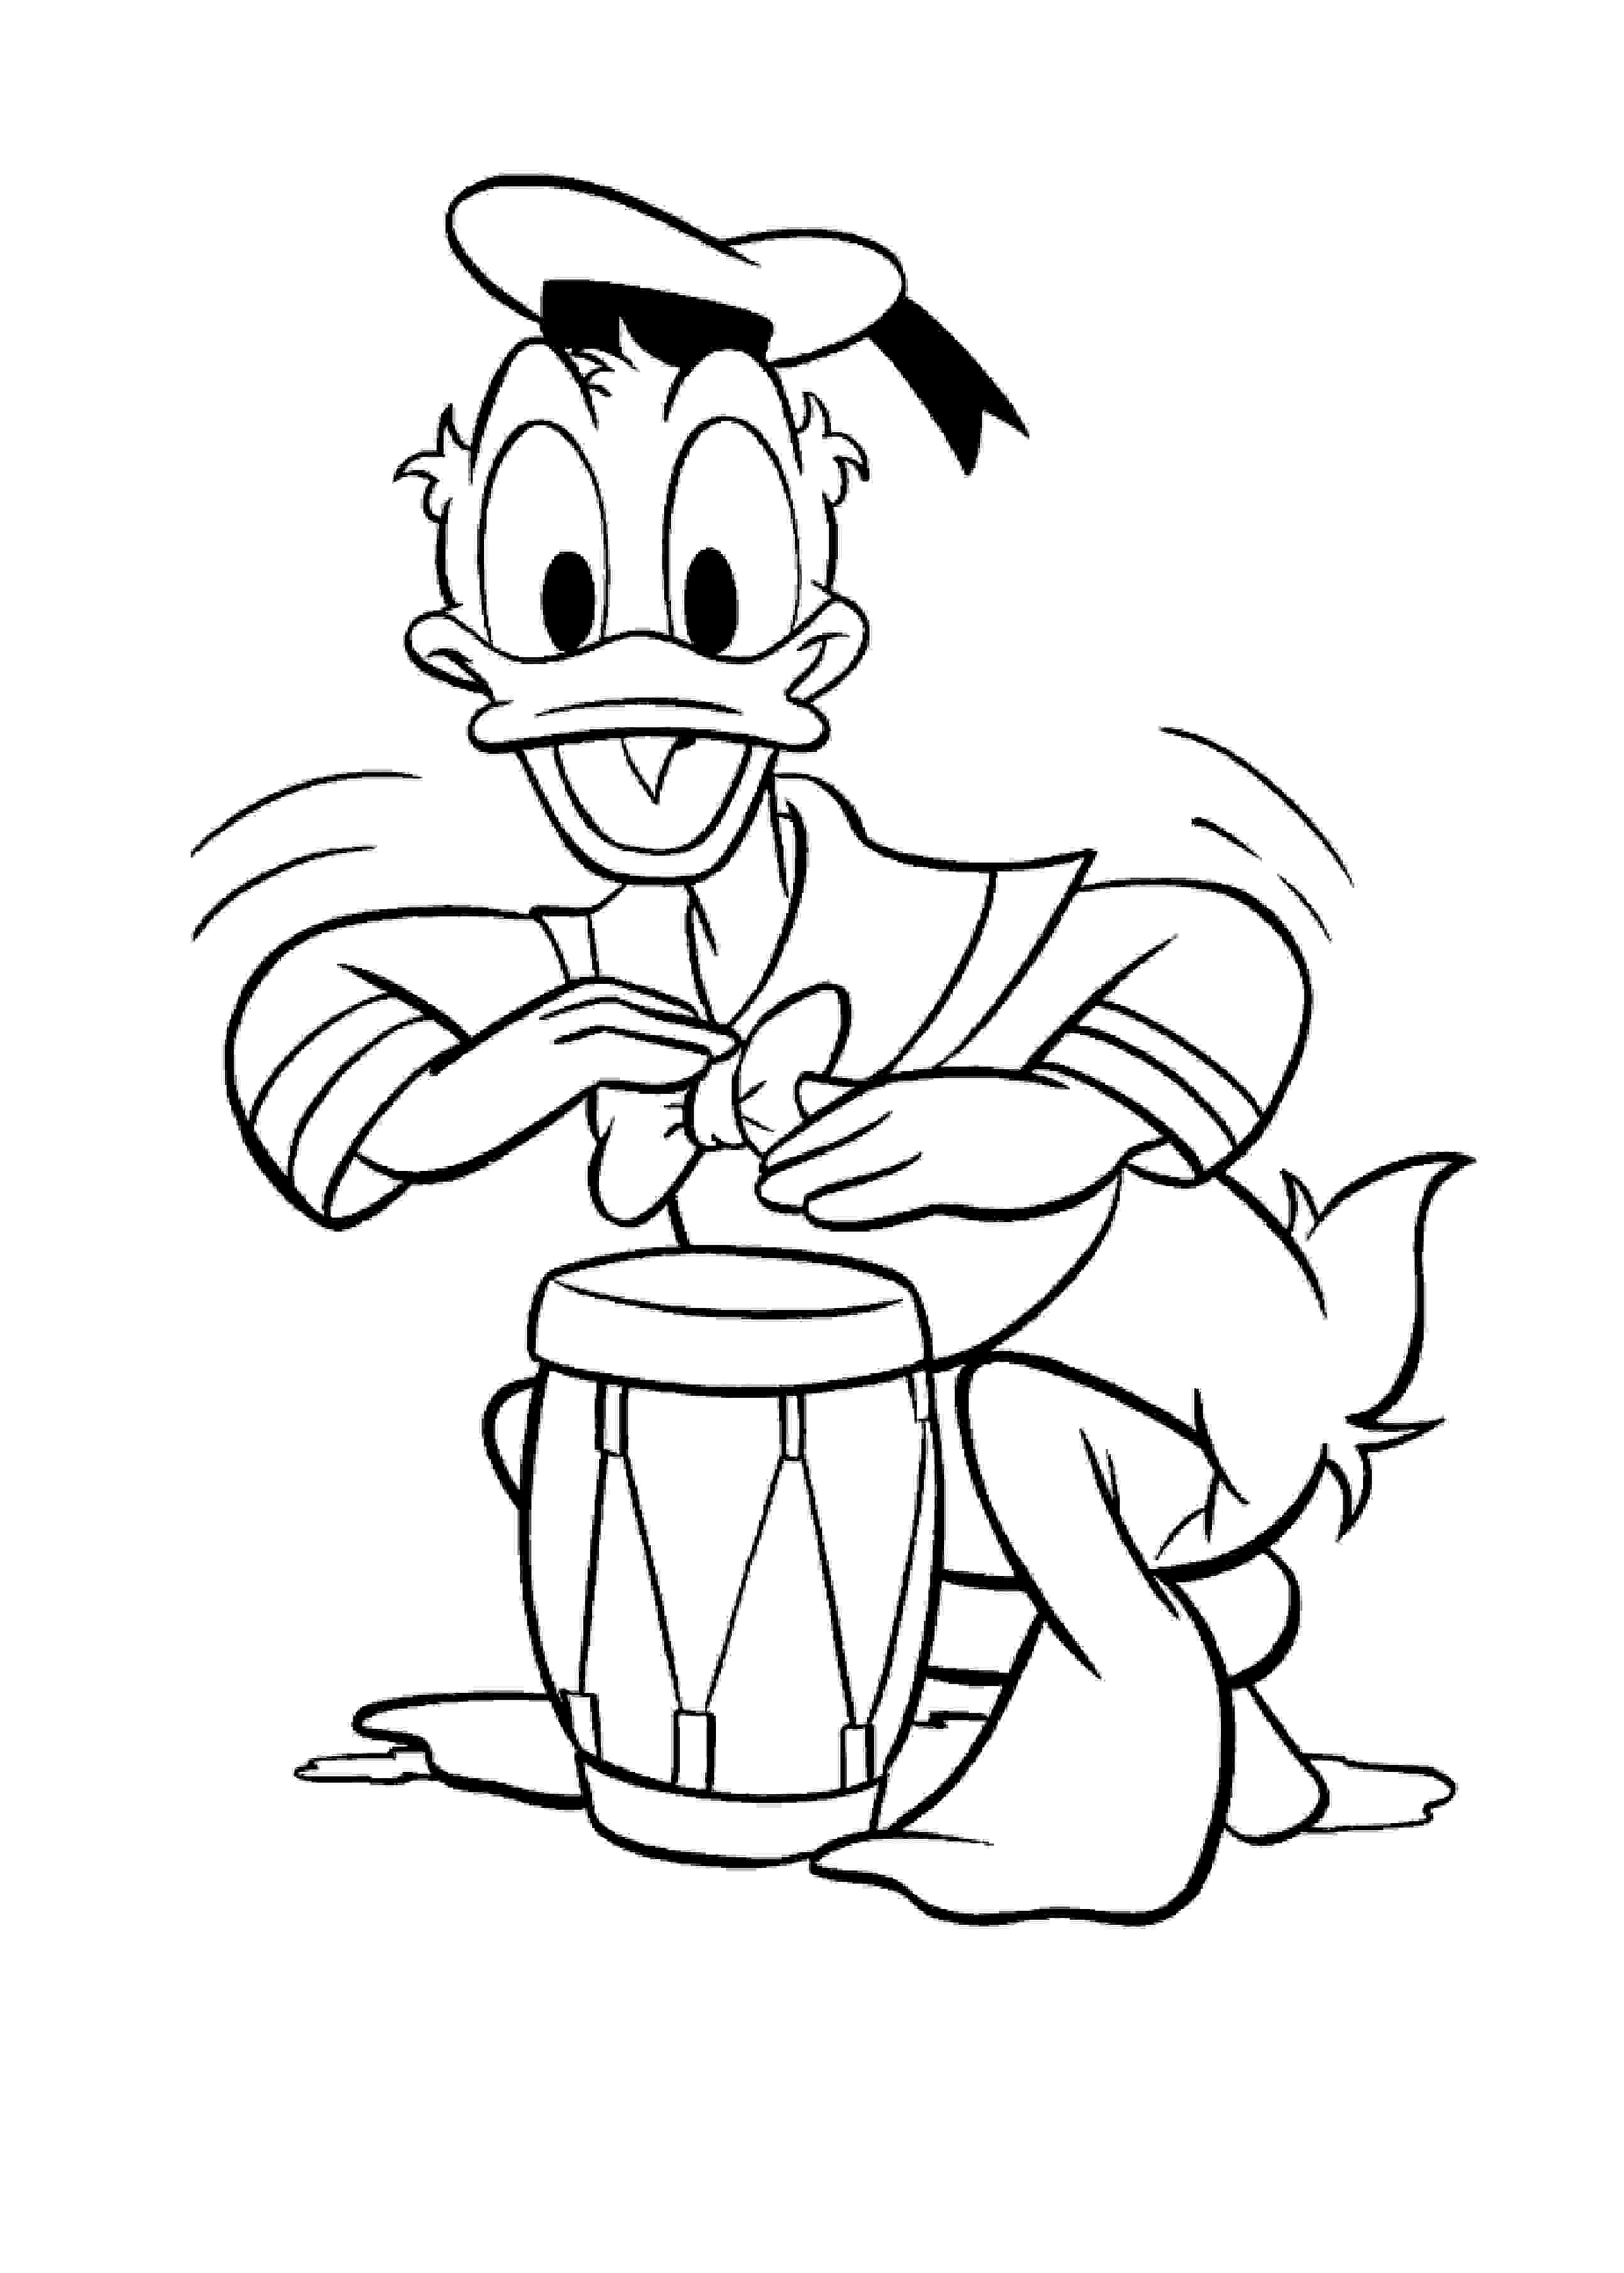 Donald (Disney) plays the drum